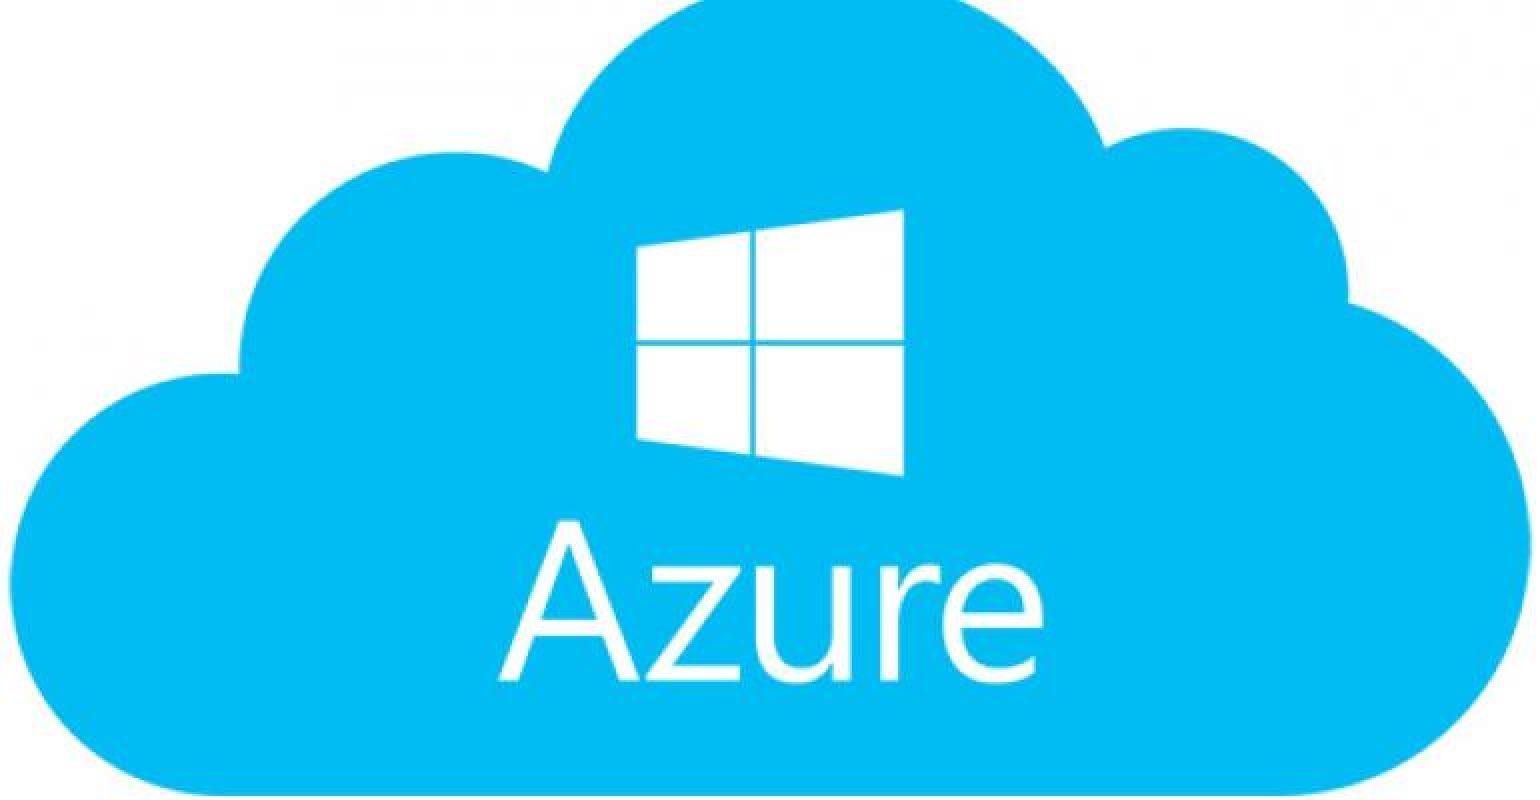 Microsoft Azure training for Beginners in Mansfield | Microsoft Azure Fundamentals | Azure cloud computing training | Microsoft Azure Fundamentals AZ-900 Certification Exam Prep (Preparation) Training Course